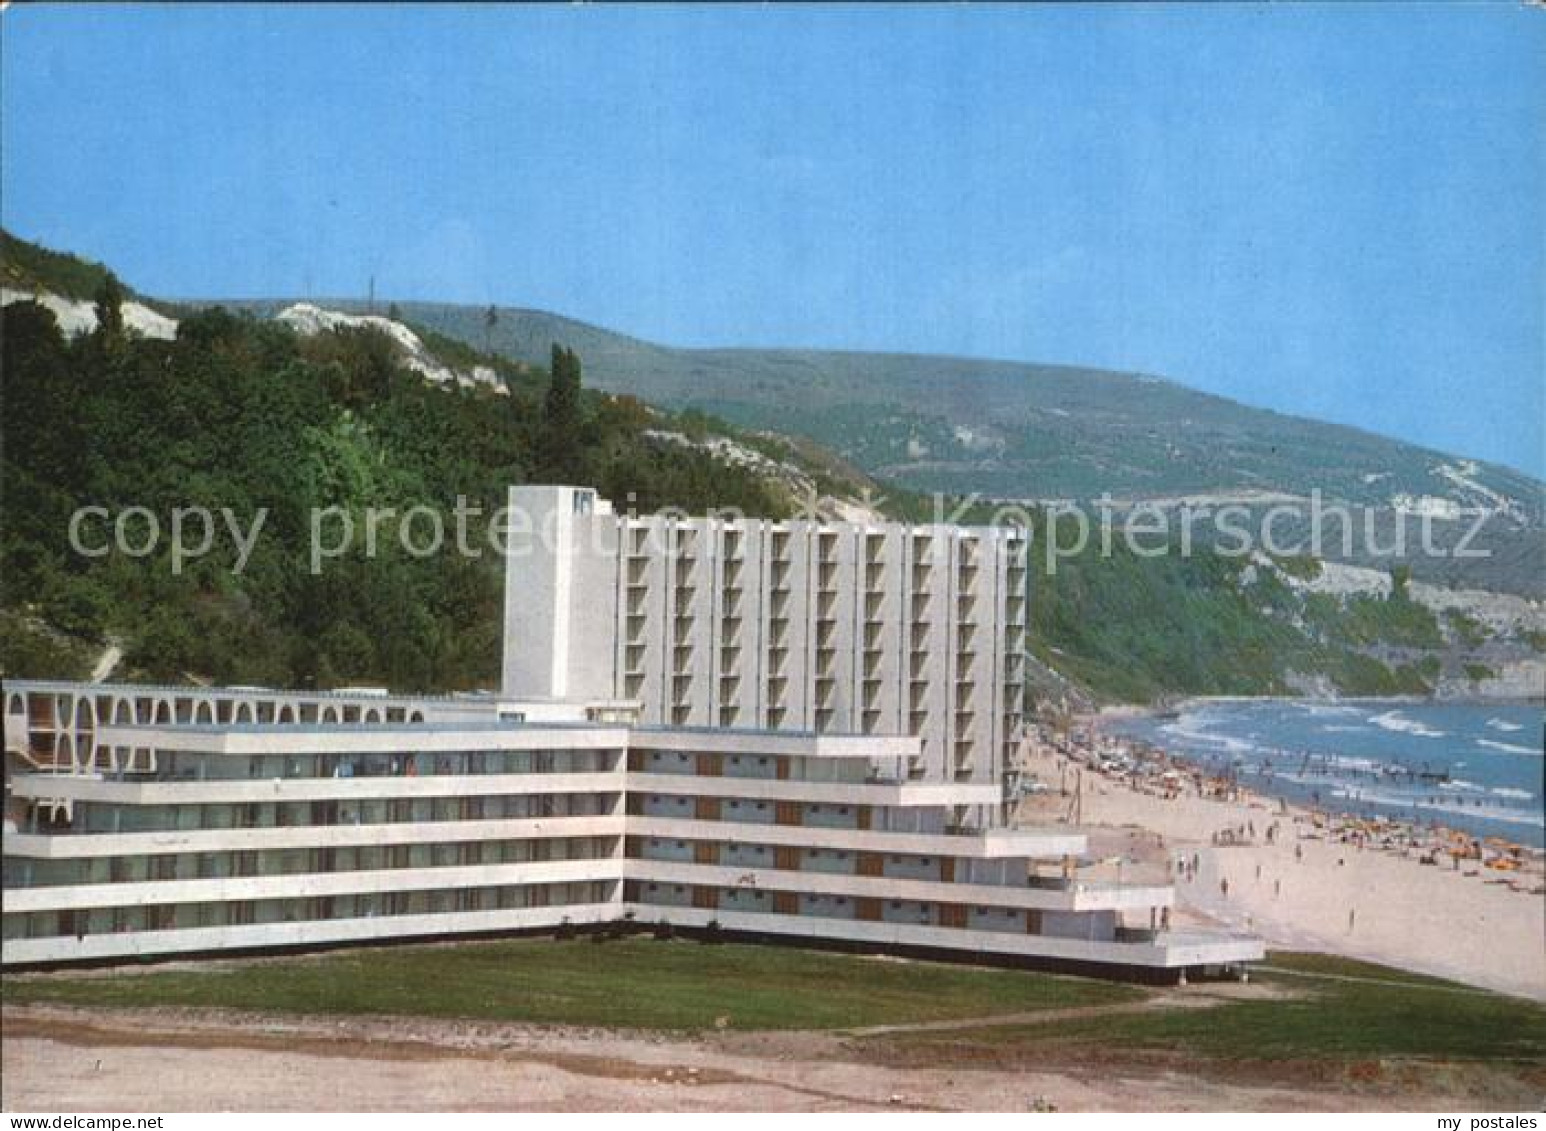 72521654 Albena Hotel Strand Burgas - Bulgaria